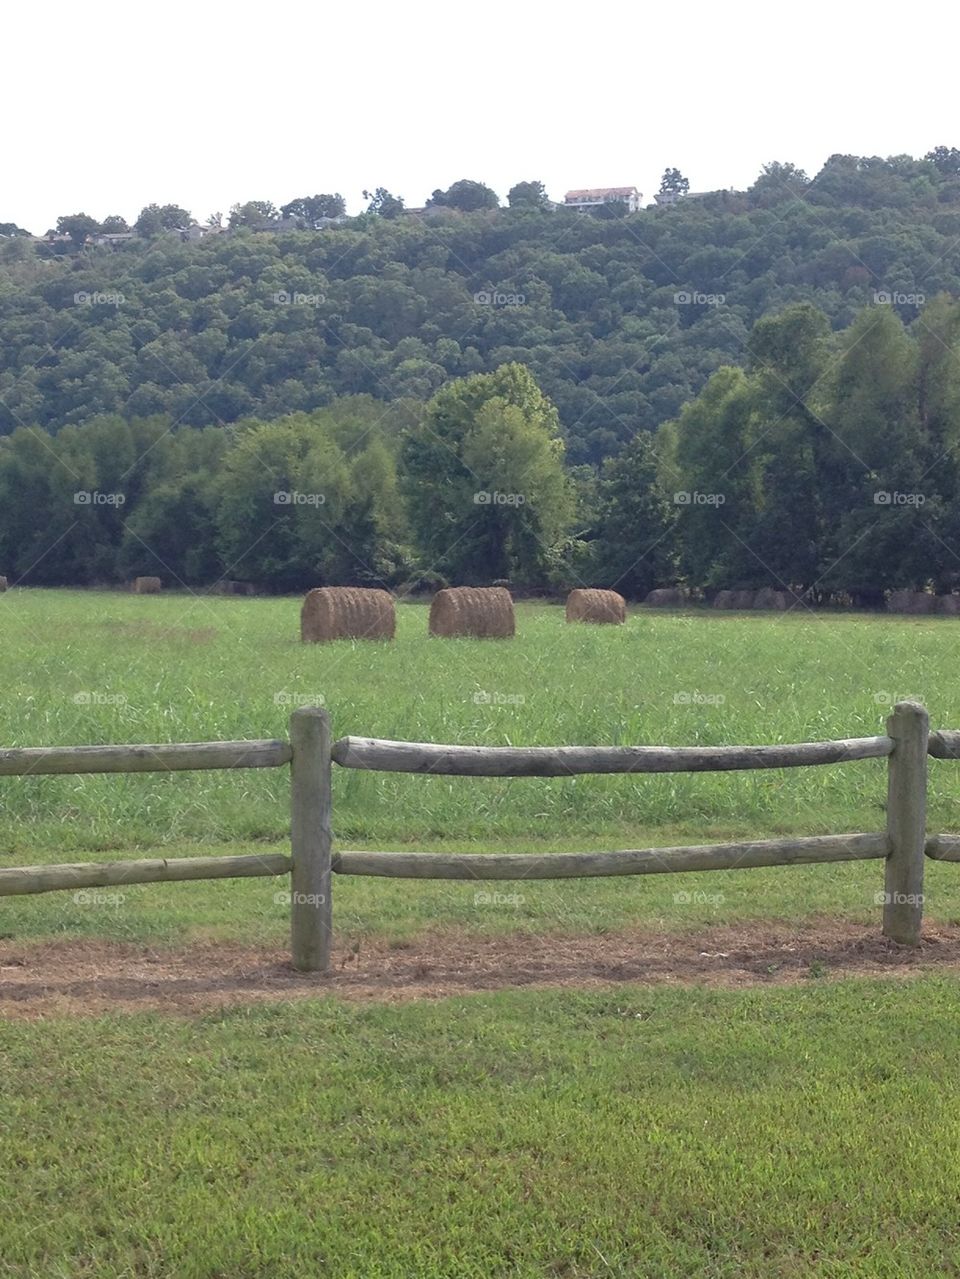 Field of hay